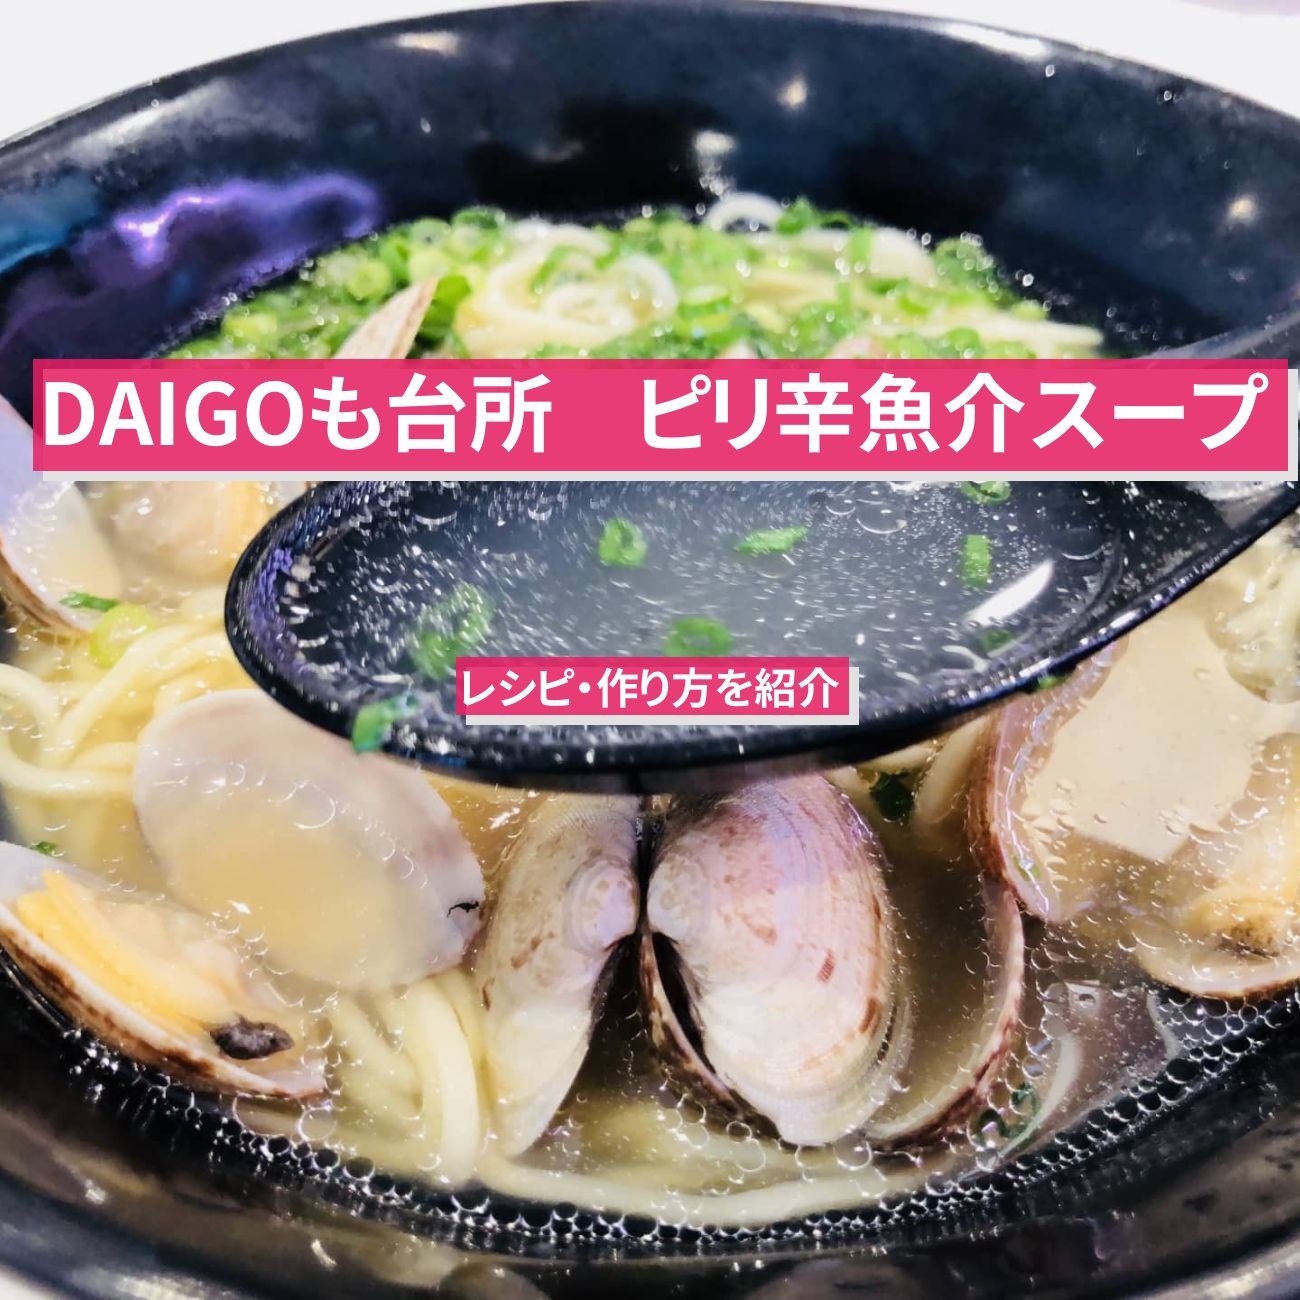 【DAIGOも台所】『ピリ辛魚介スープ』のレシピ・作り方を紹介〔ダイゴも台所〕